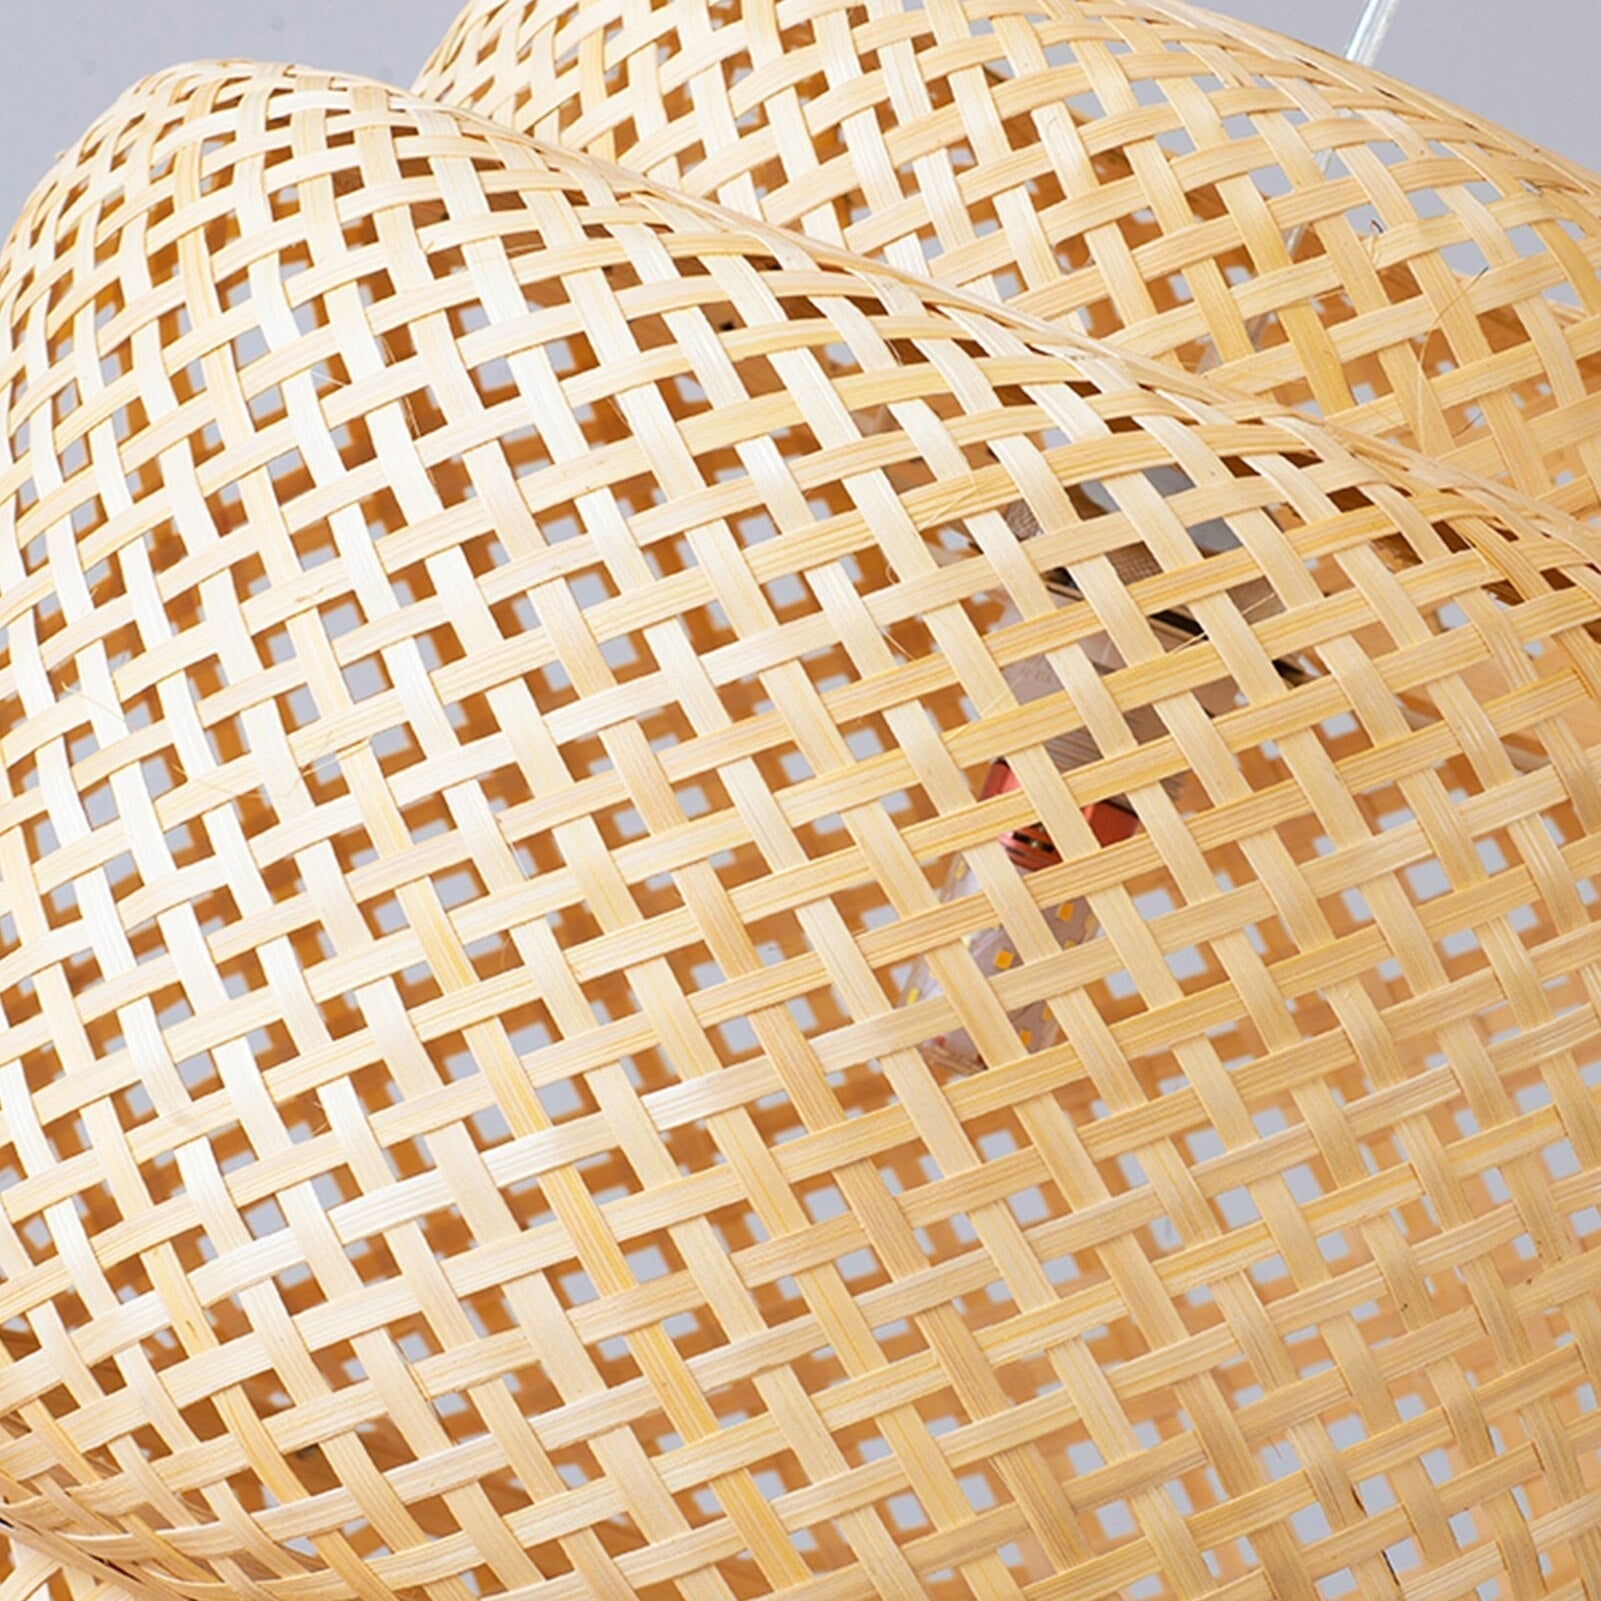 Bamboo Pendant Lighting | Biophilic Japandi Cottagecore Lamp Decor | Handmade Ceiling - Lamps